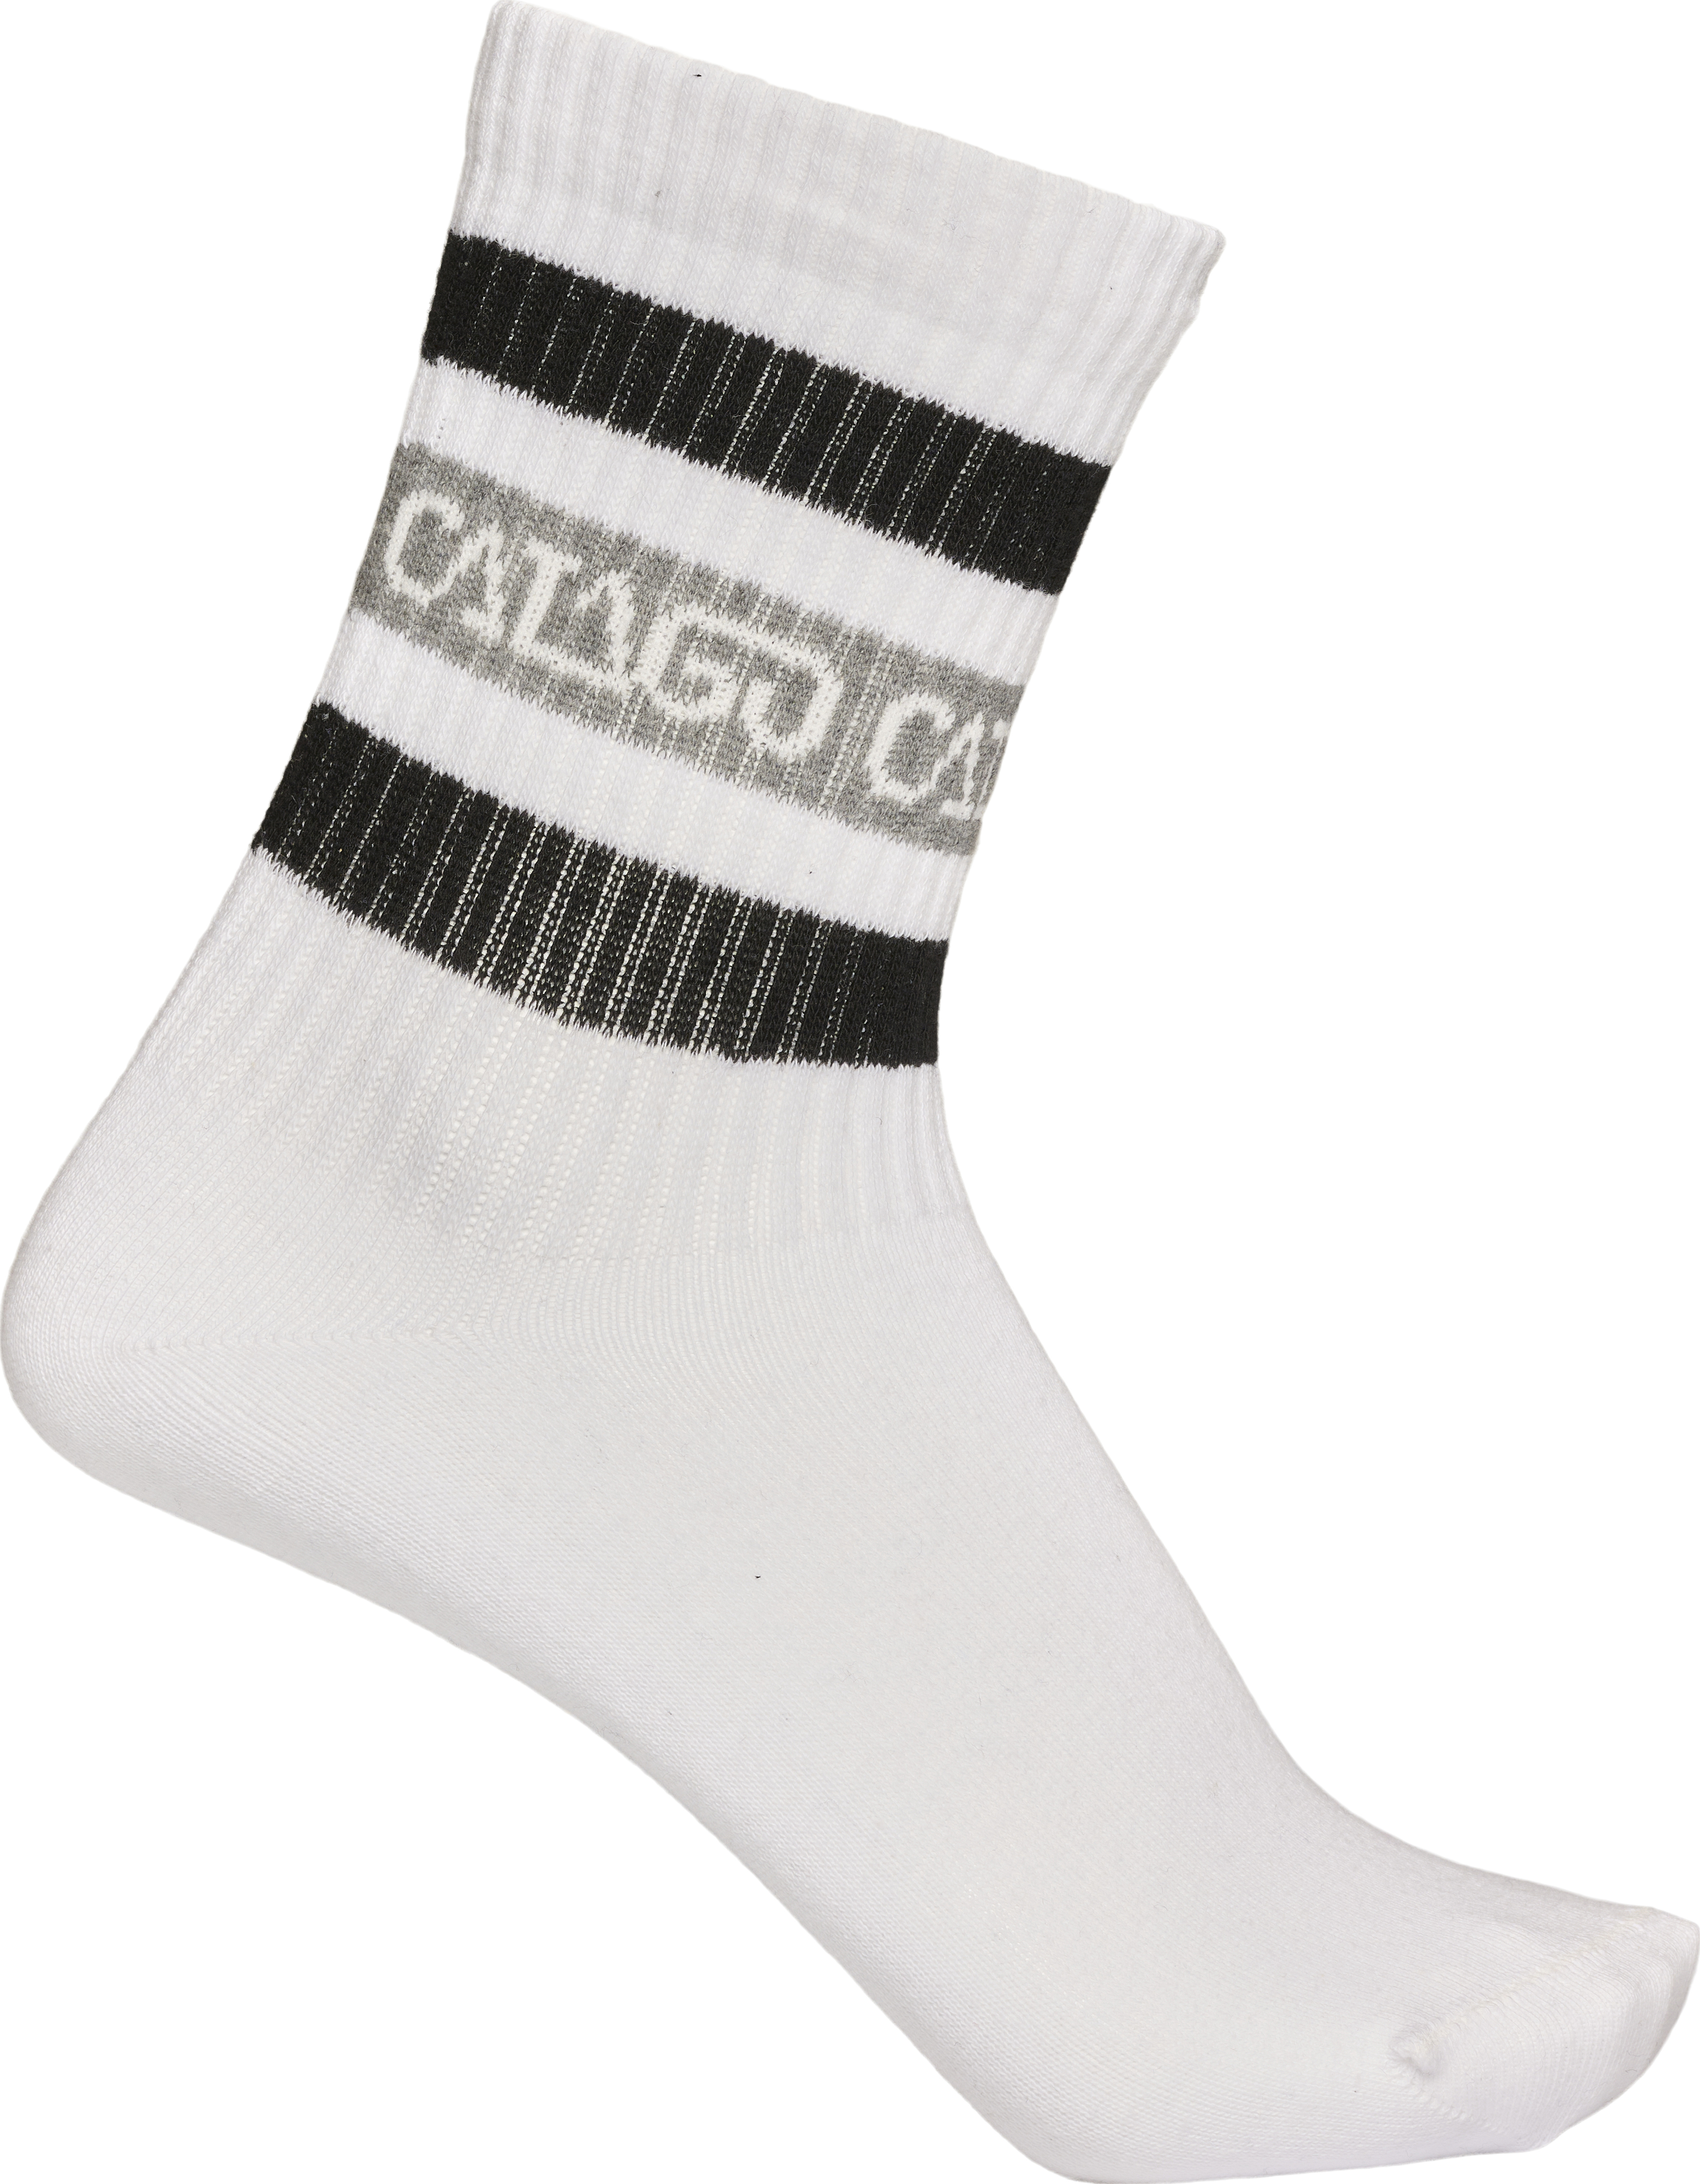 CATAGO Polly Logo Mid Length Socks - White (33-36), Catago